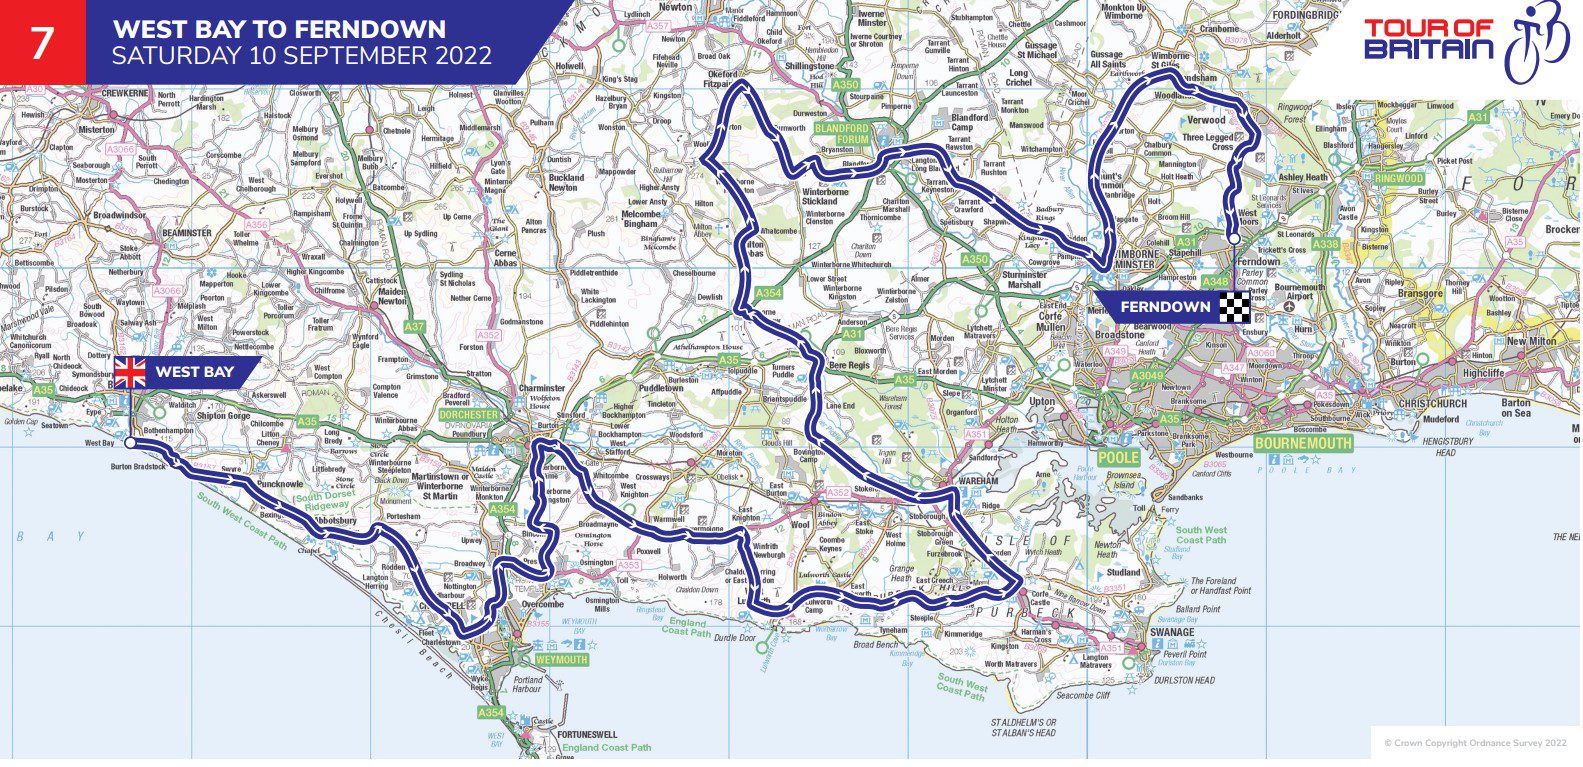 Tour of Britain route